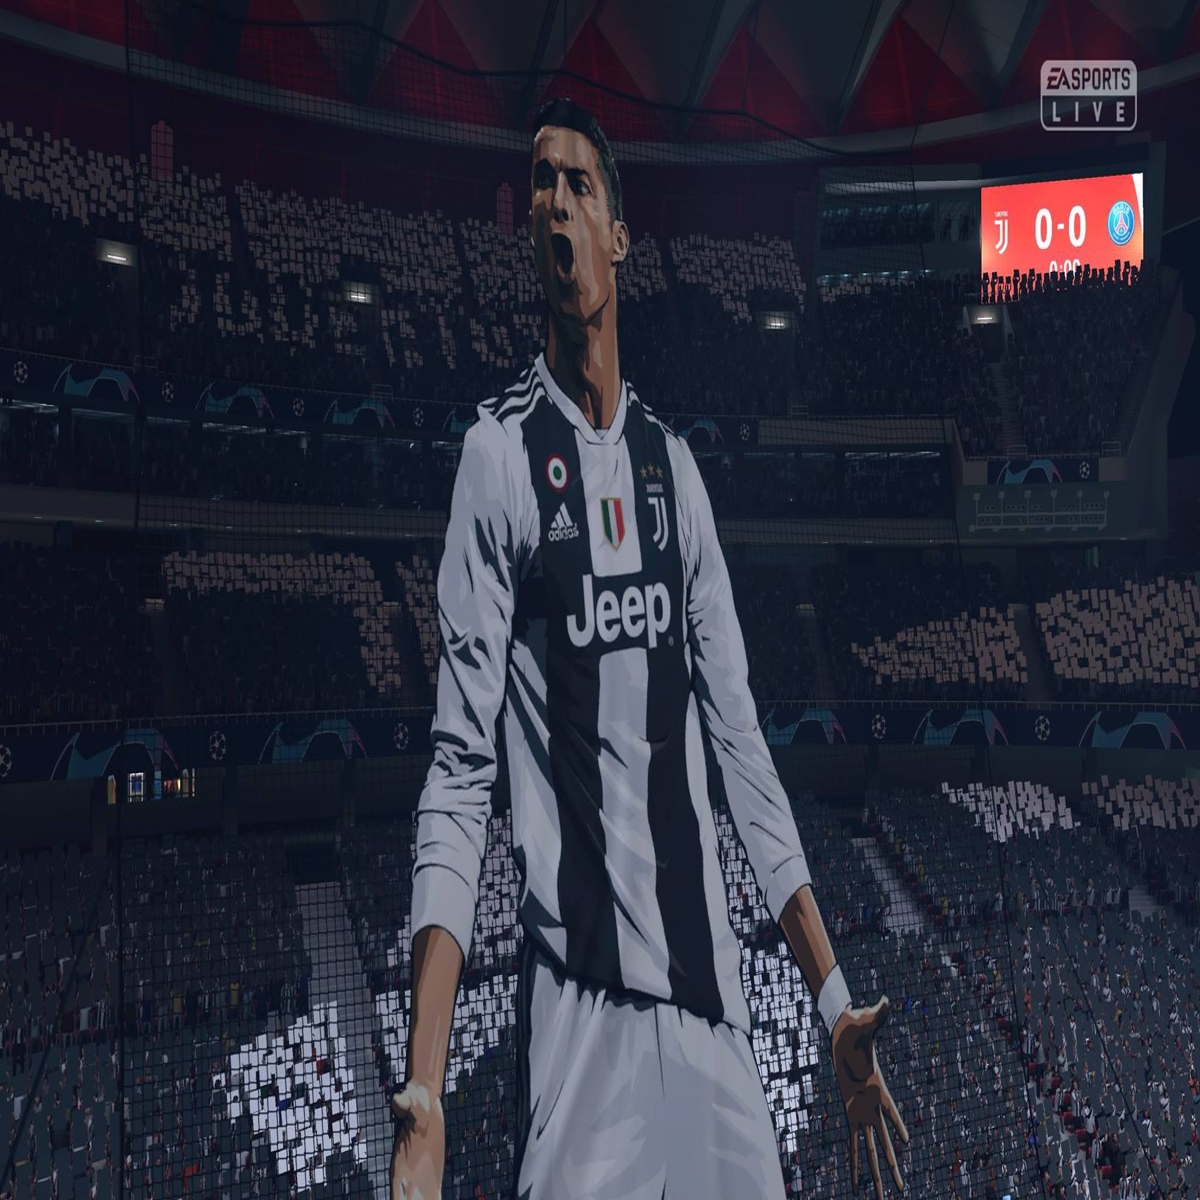 FIFA 19 review - the spectacular, video game modern football deserves | Eurogamer.net